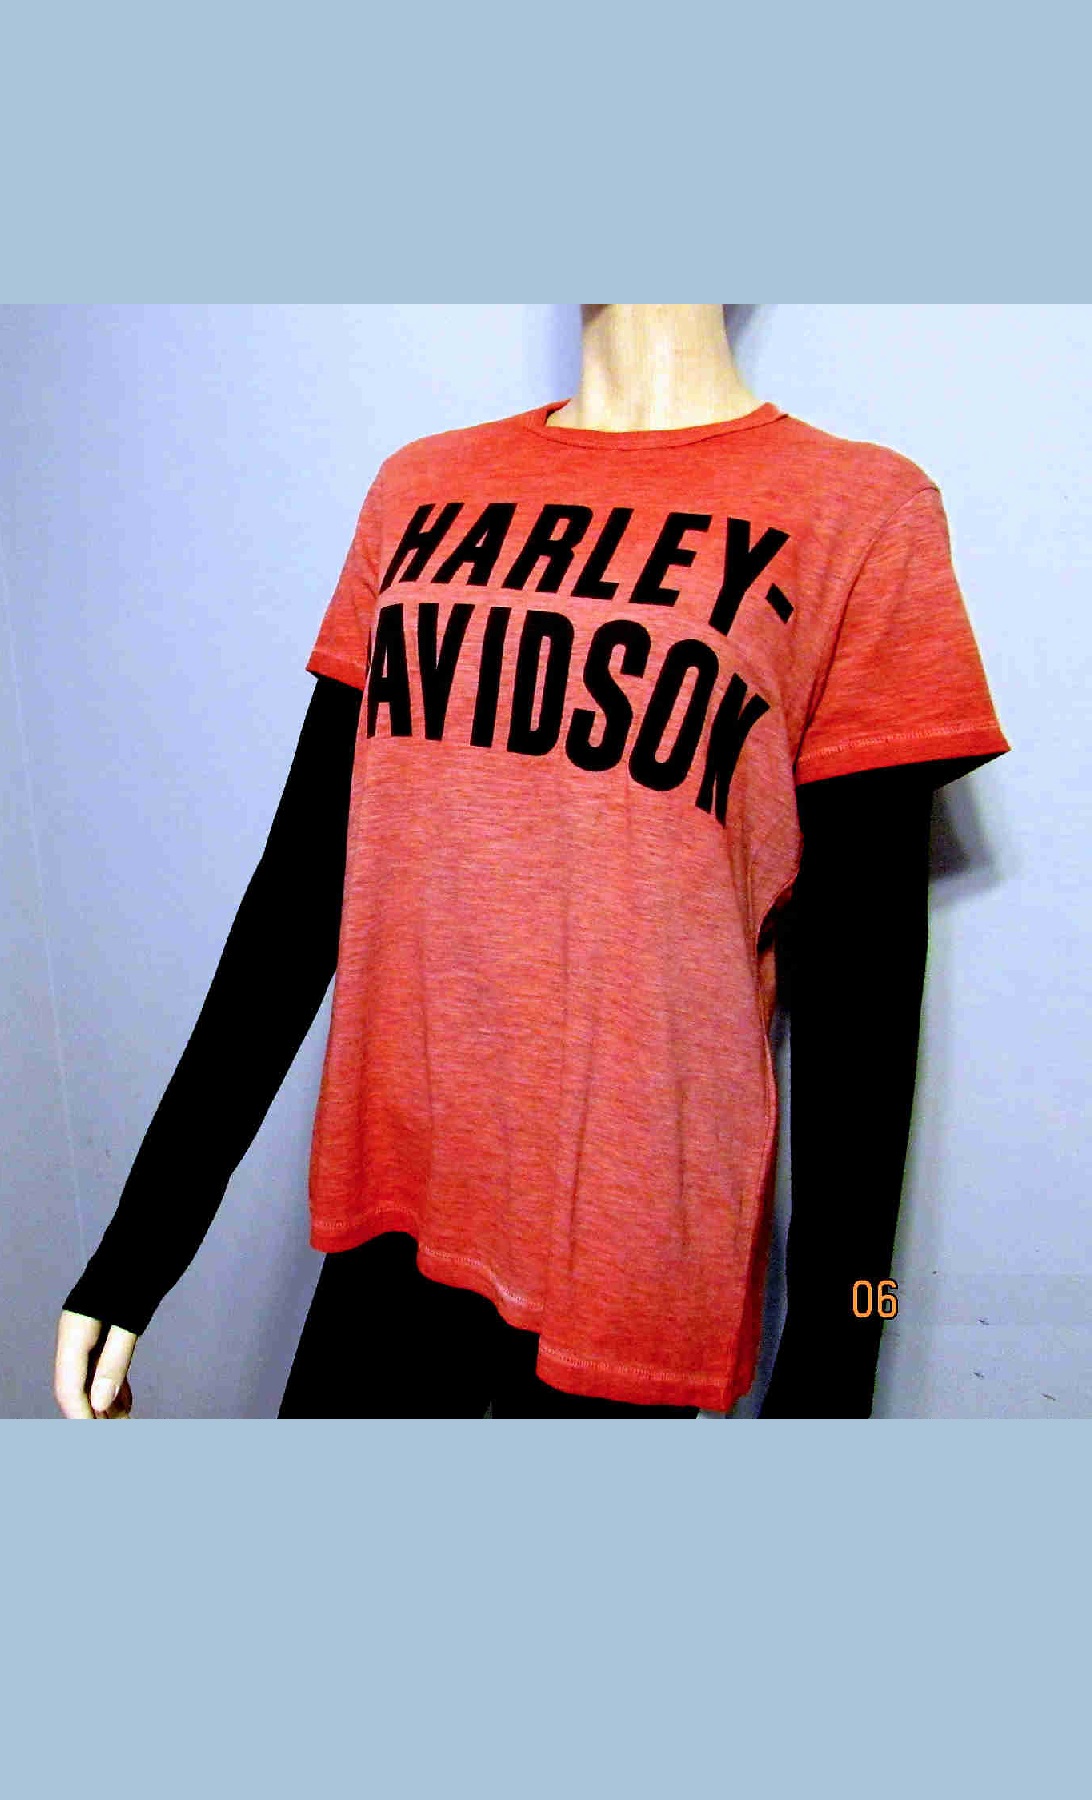 Harley Davidson Original T-shirt